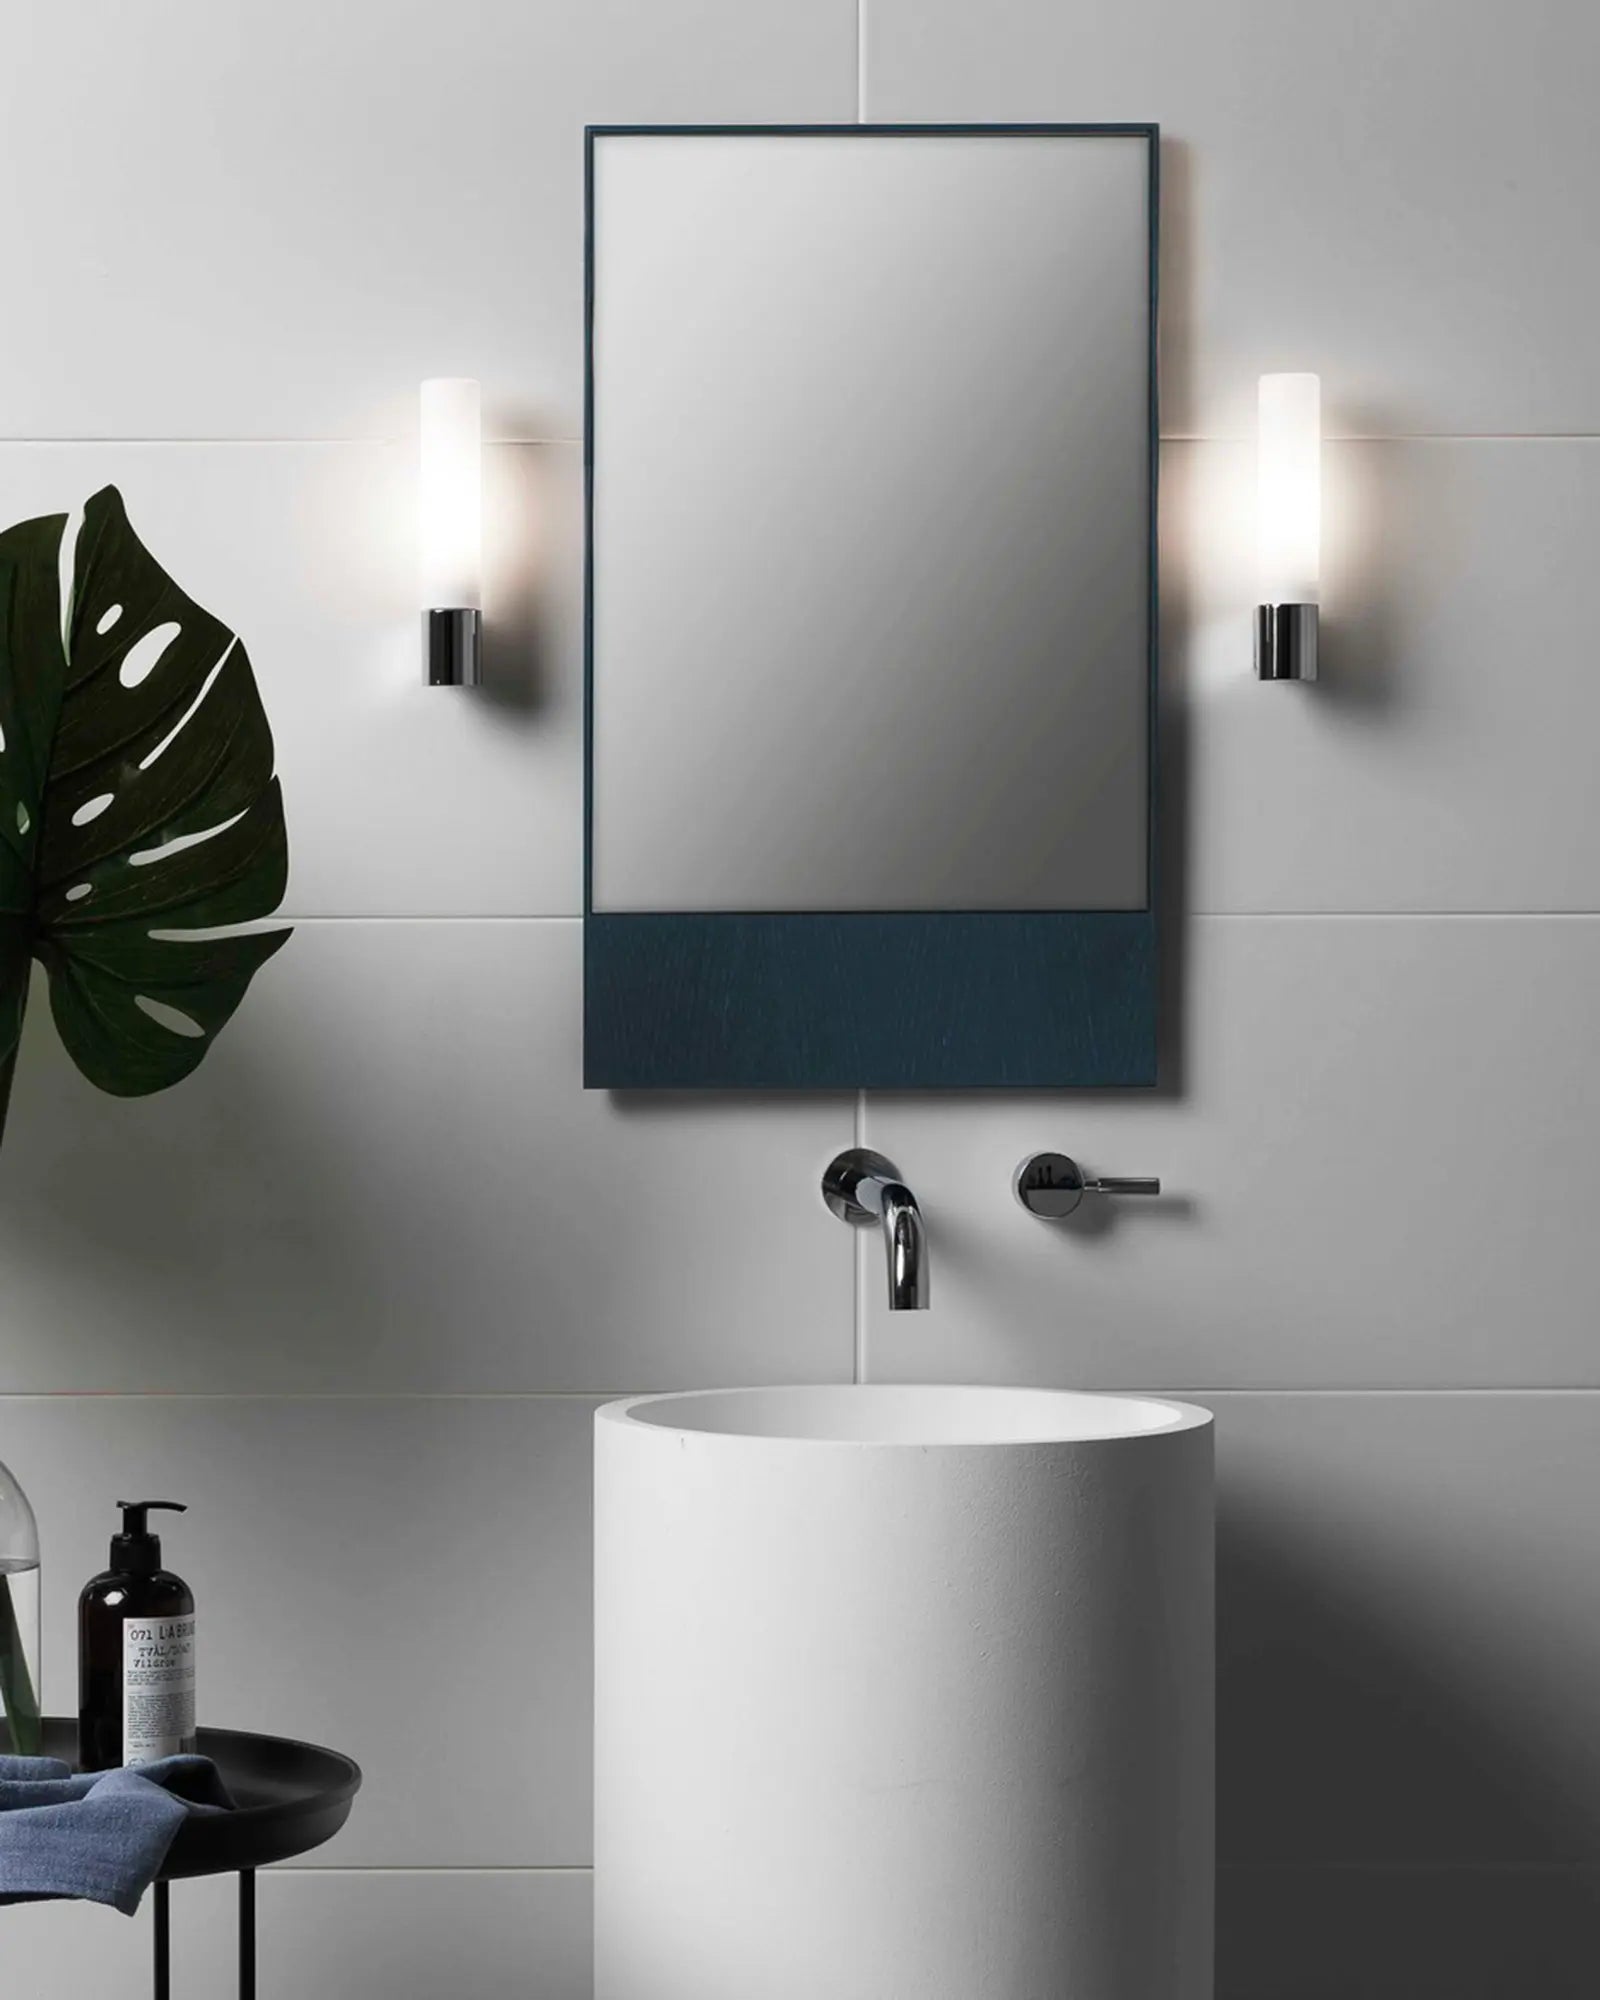 Bari contemporary lantern style bathroom wall lamp on the mirror sides